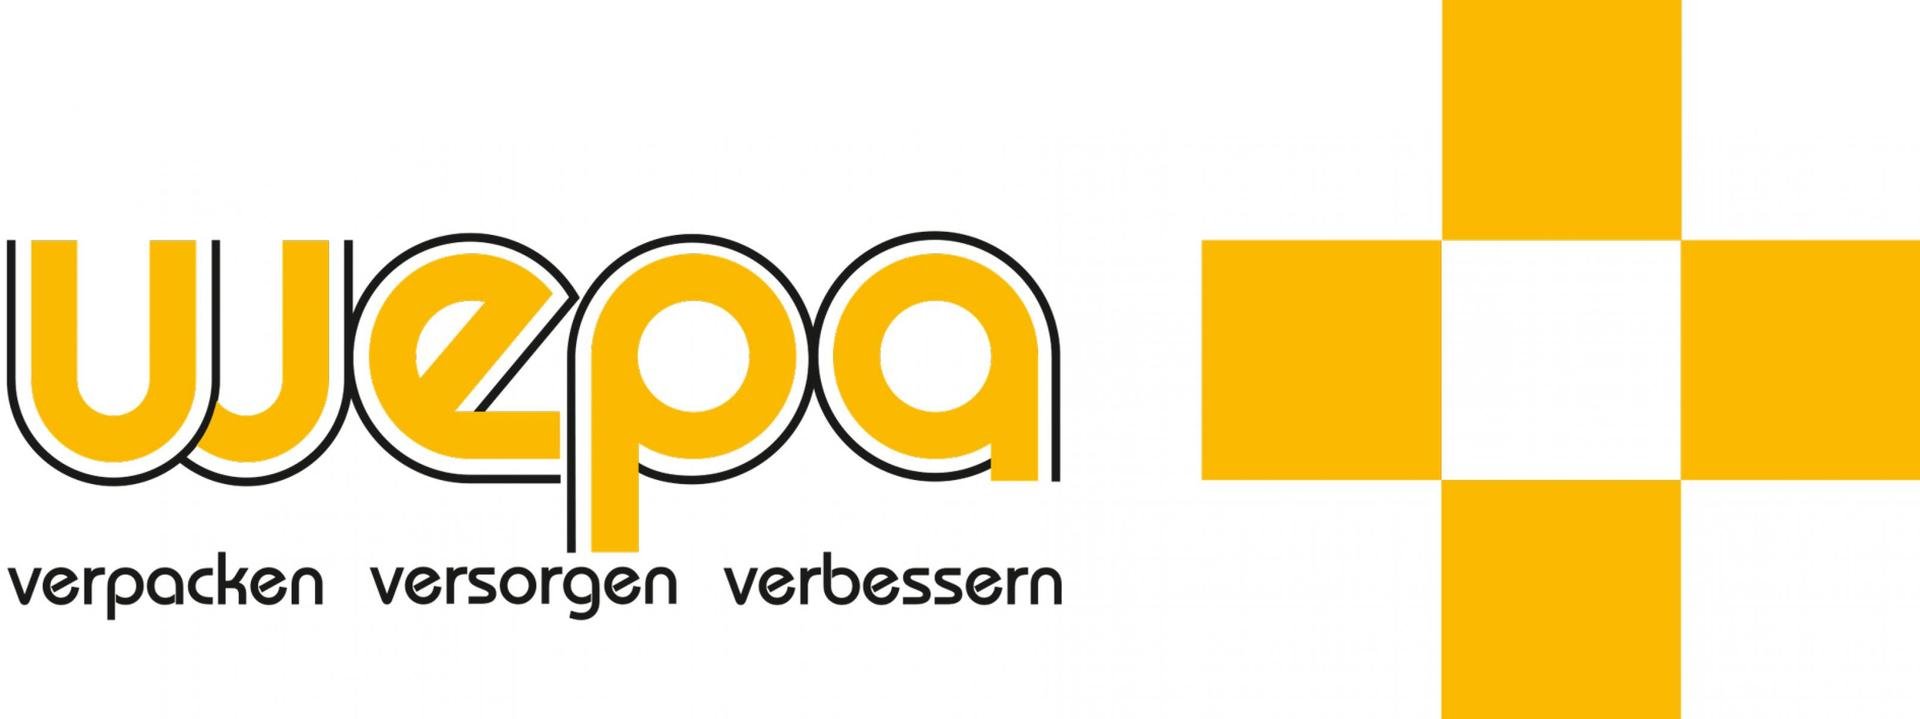 Wepa Verpackungen GmbH Logo